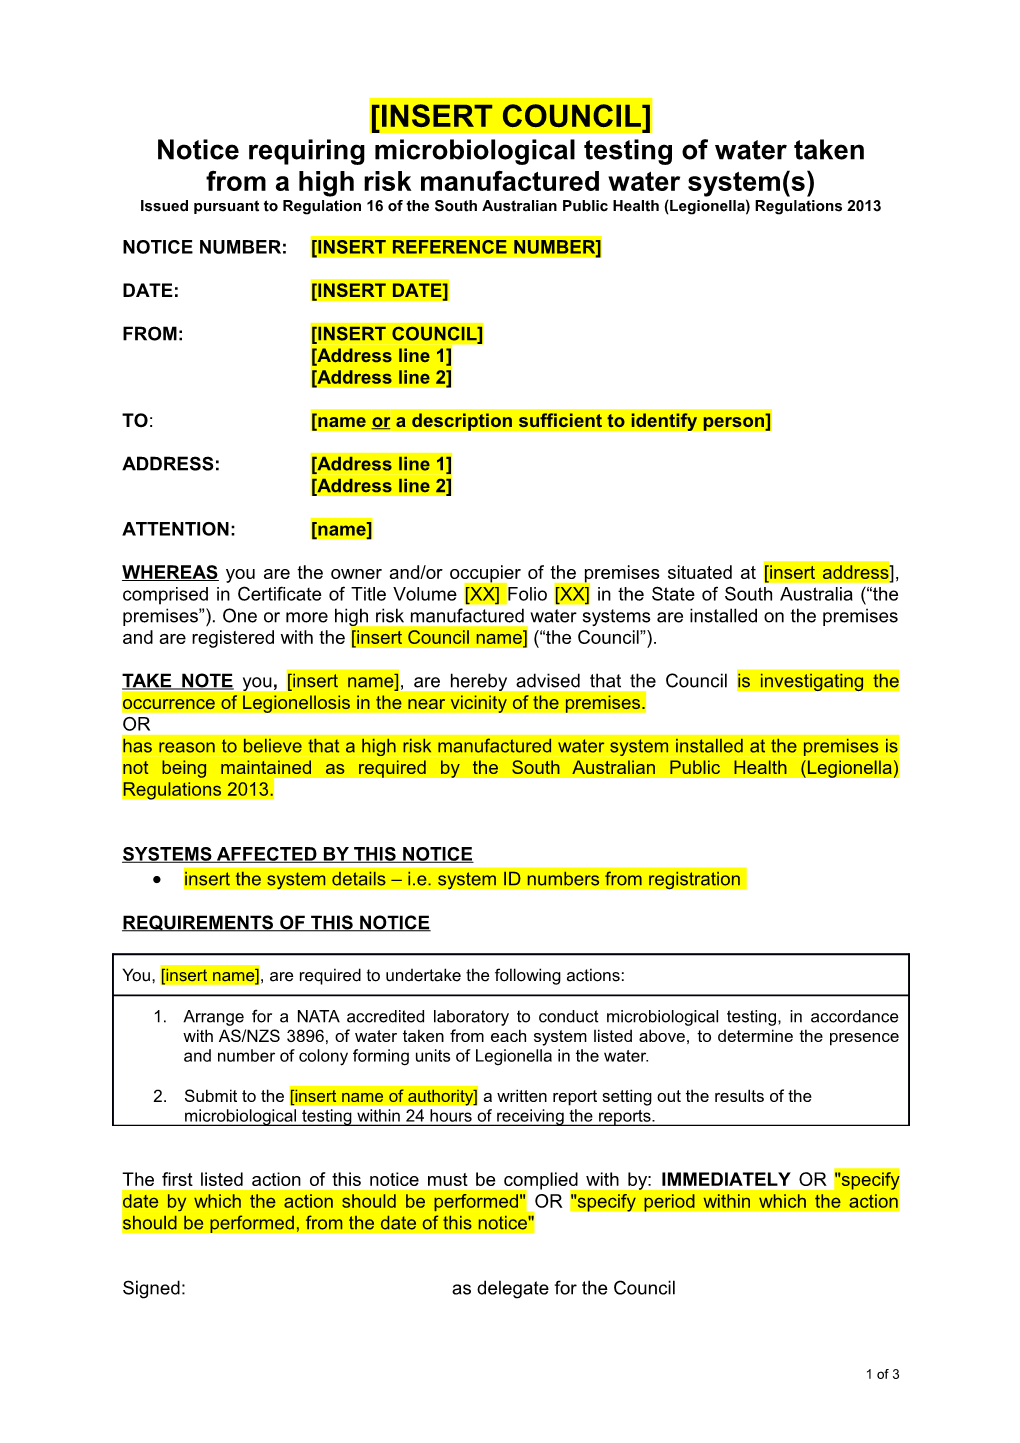 Issued Pursuant to Regulation16 of the South Australian Public Health (Legionella) Regulations